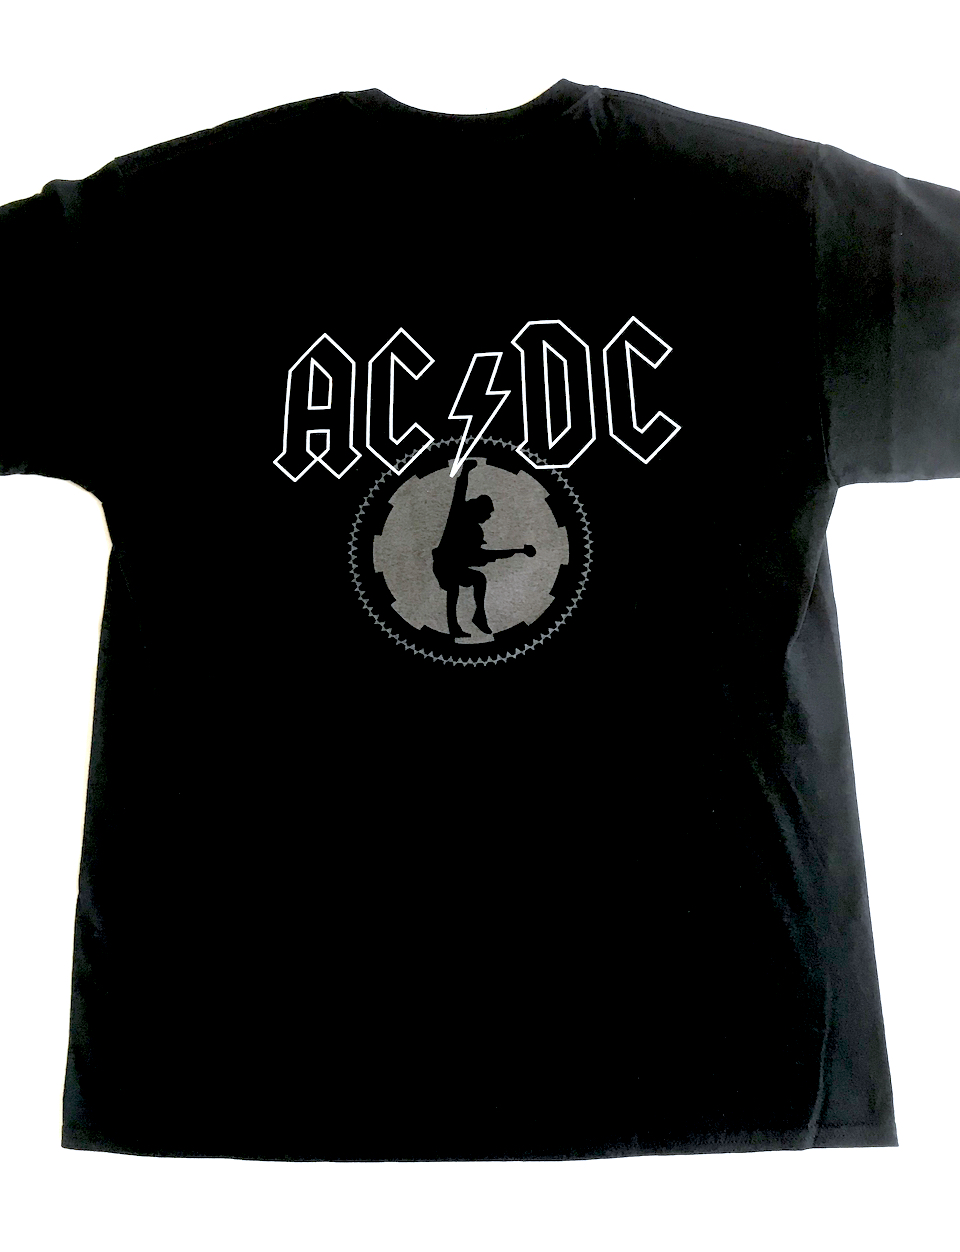 AC/DC - Black Ice - Hard Rock, Majice, Rock